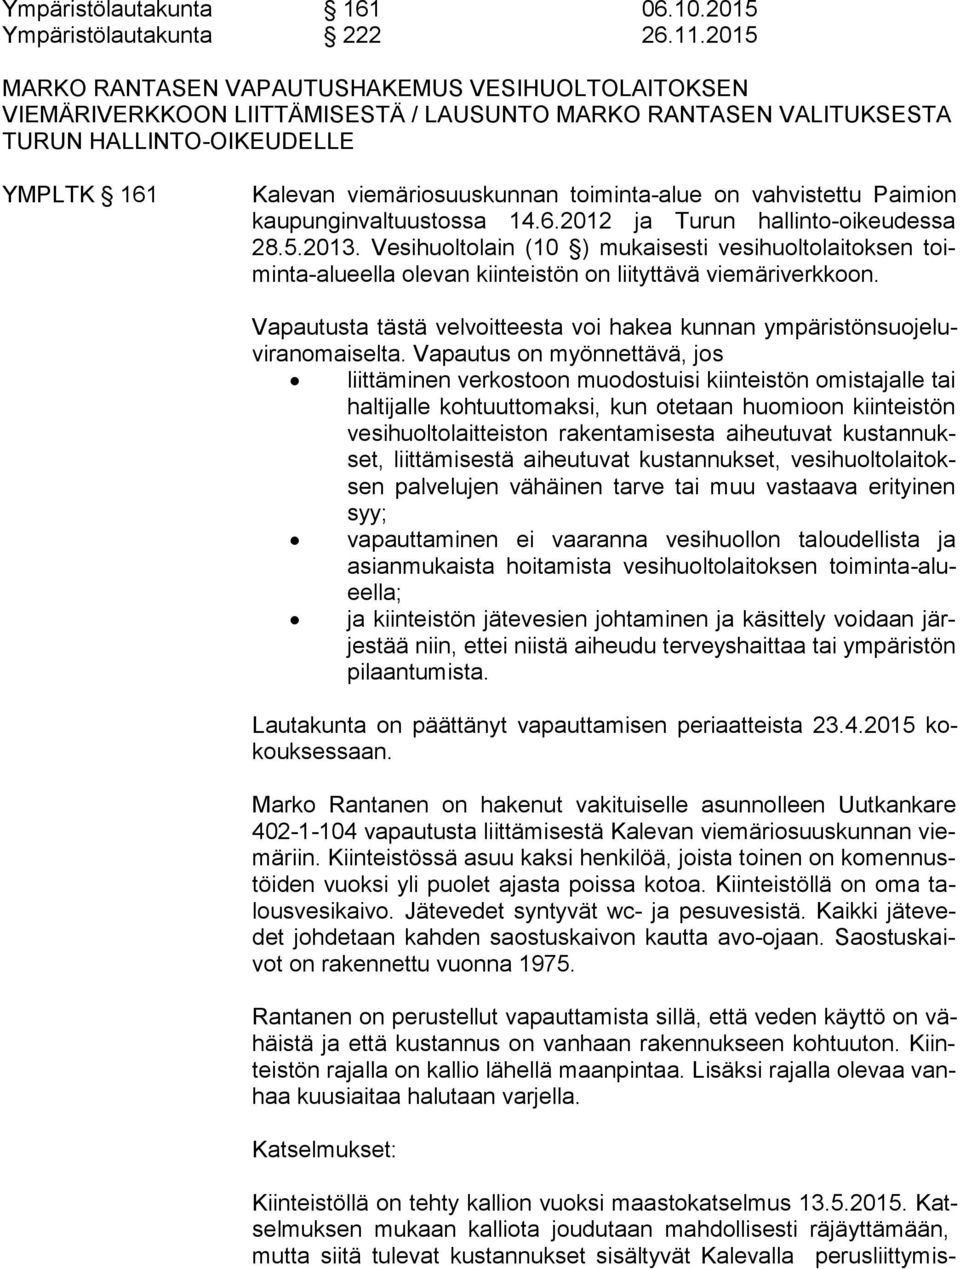 toiminta-alue on vahvistettu Paimion kau pun gin val tuus tos sa 14.6.2012 ja Turun hallinto-oikeudessa 28.5.2013.